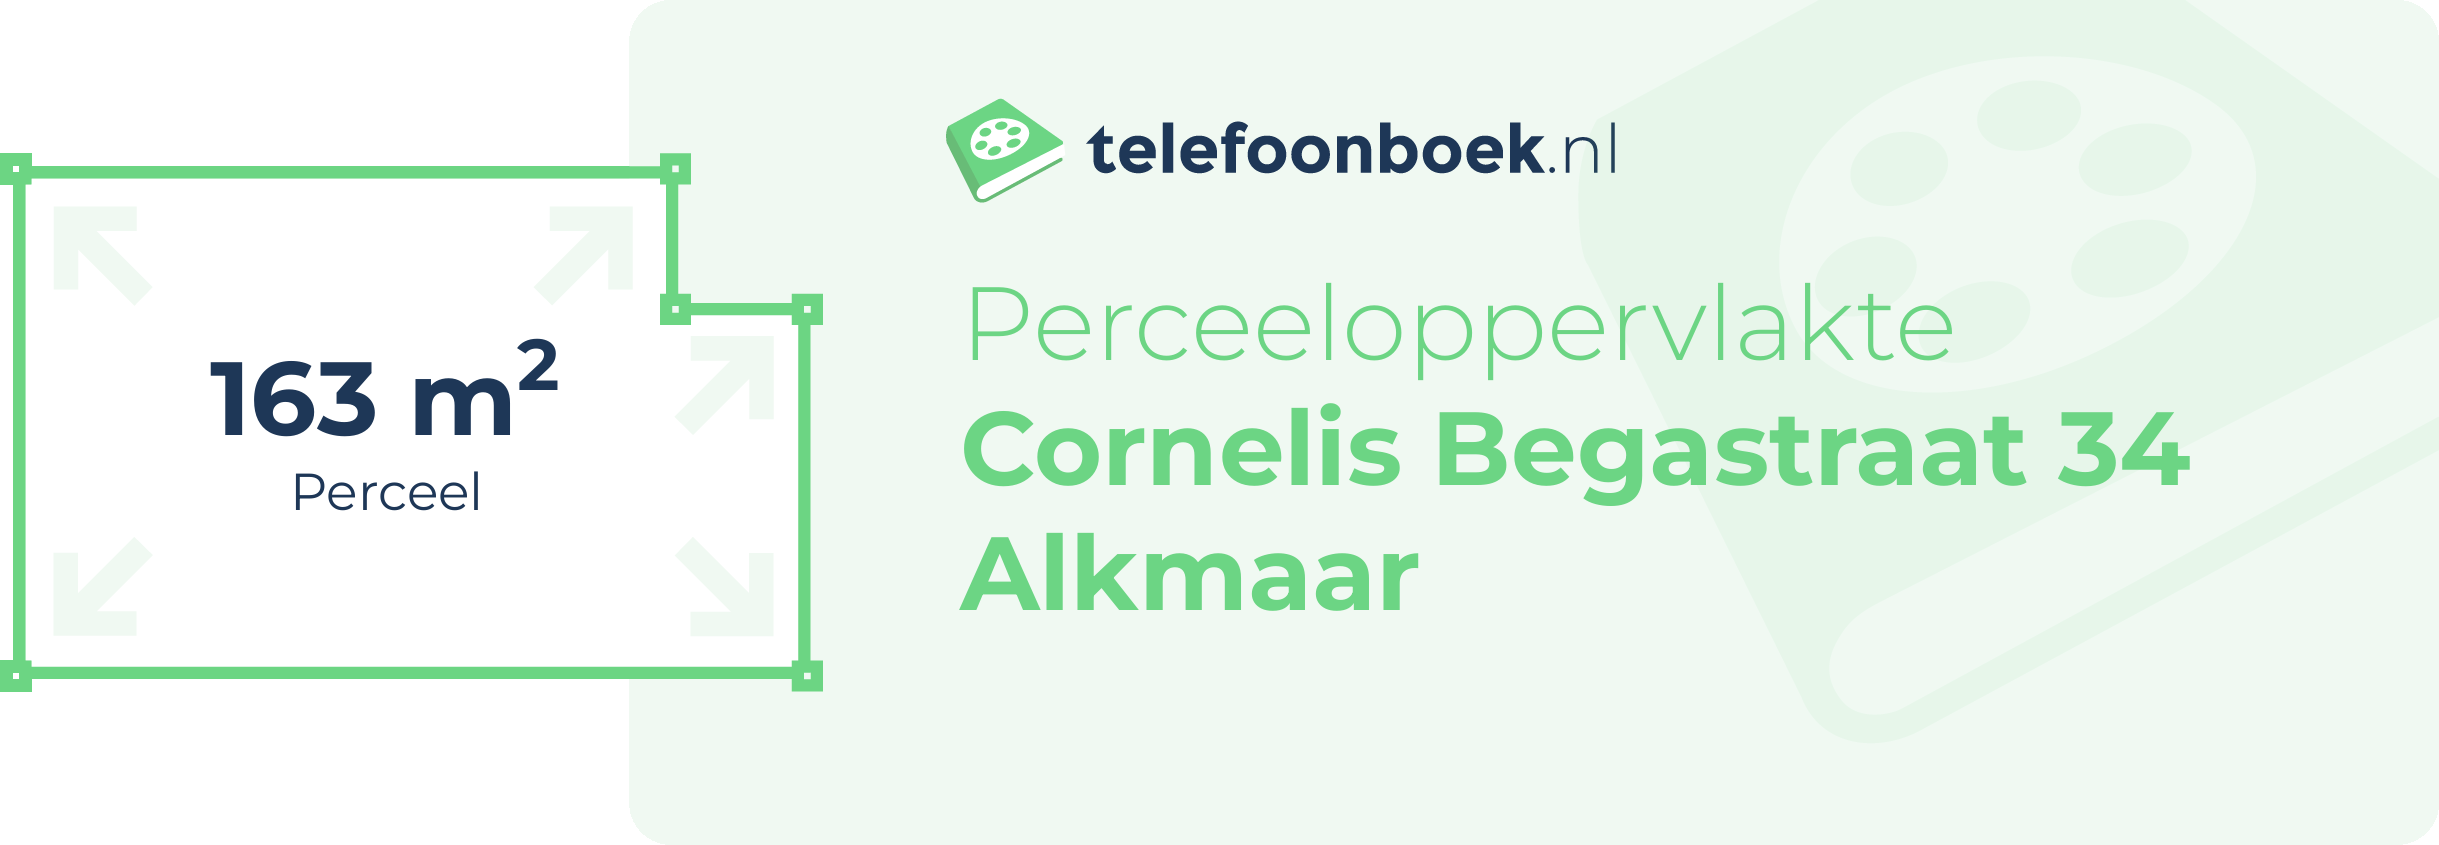 Perceeloppervlakte Cornelis Begastraat 34 Alkmaar